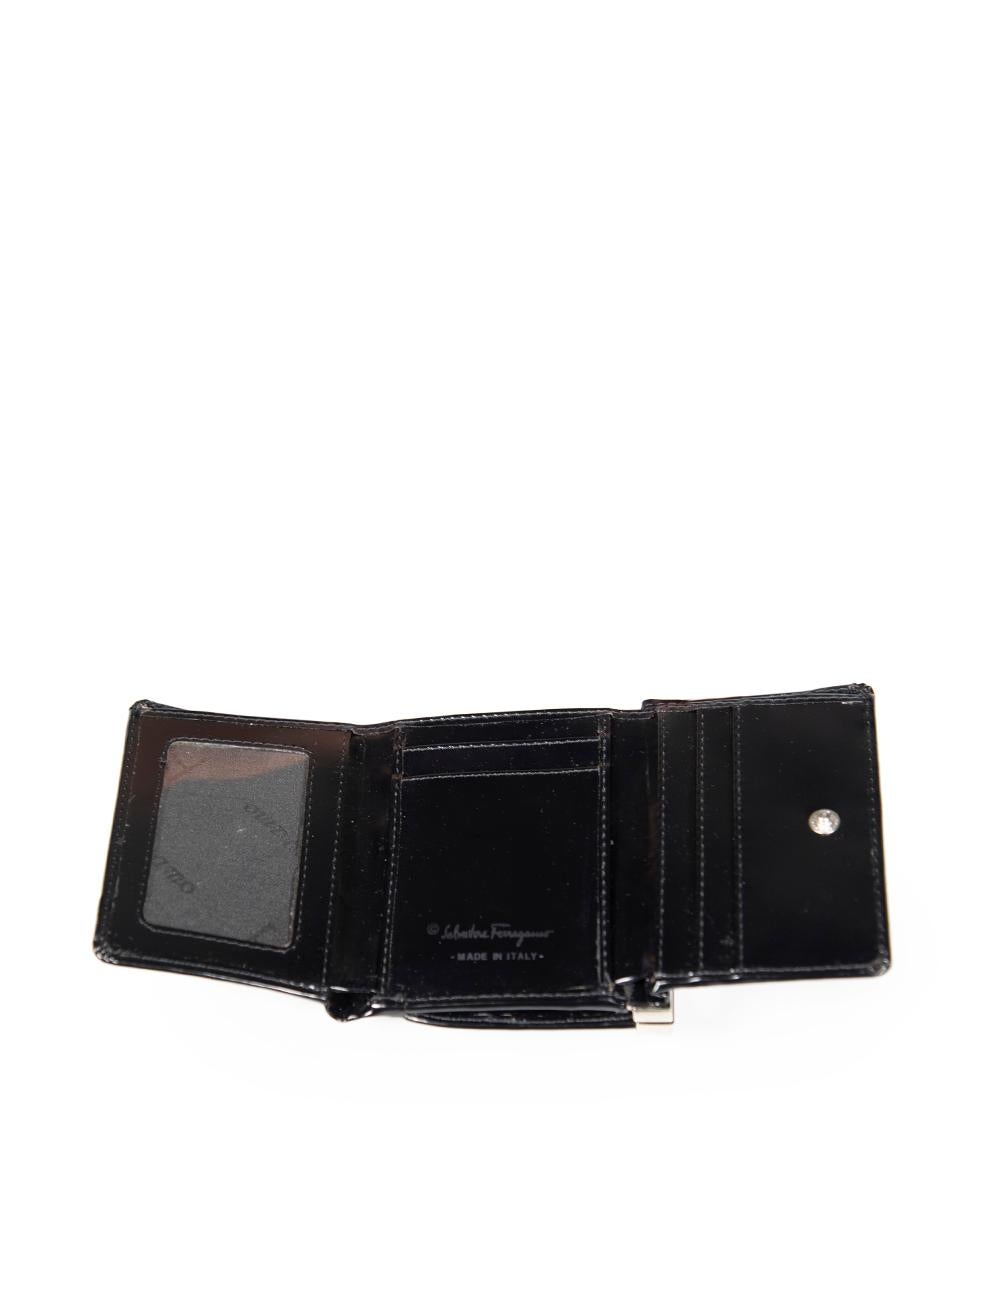 Salvatore Ferragamo Black Leather Gamaguchi Gancini Wallet For Sale 1